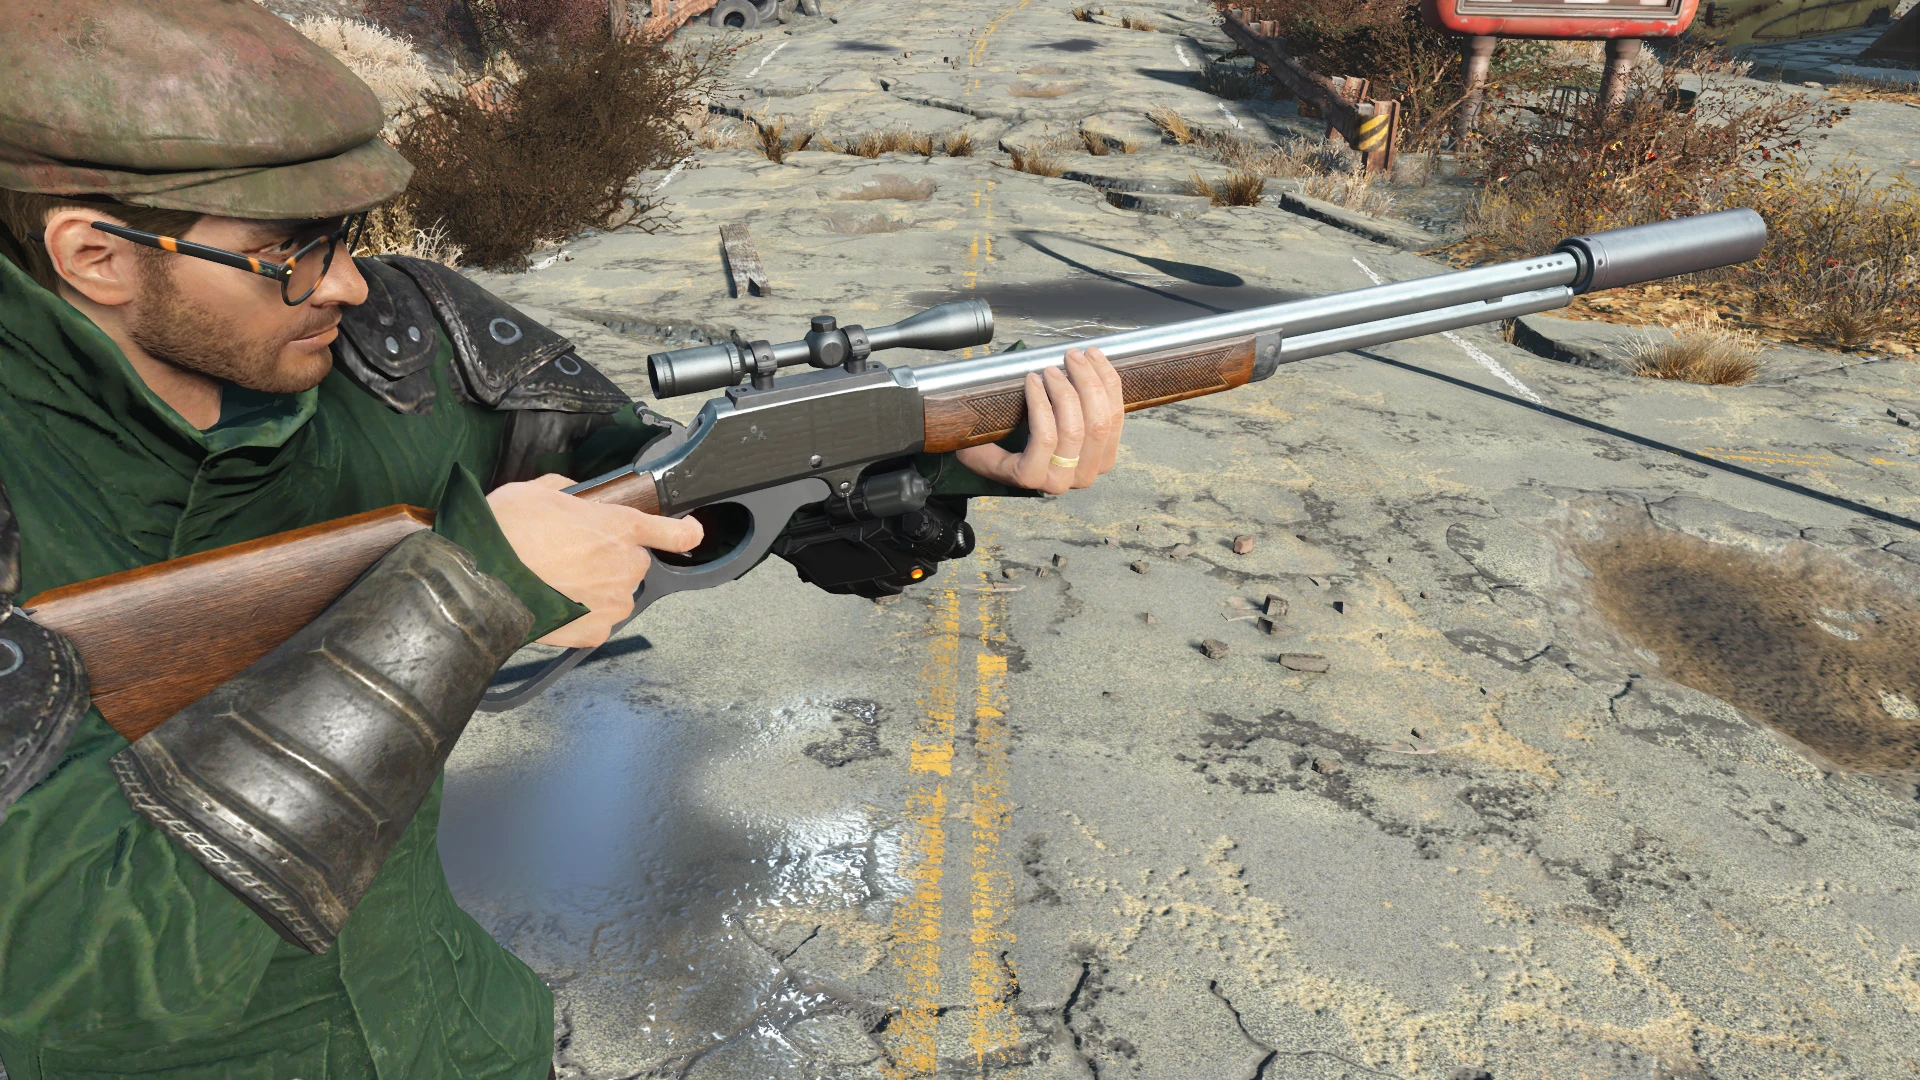 fallout 4 sniper rifle mods